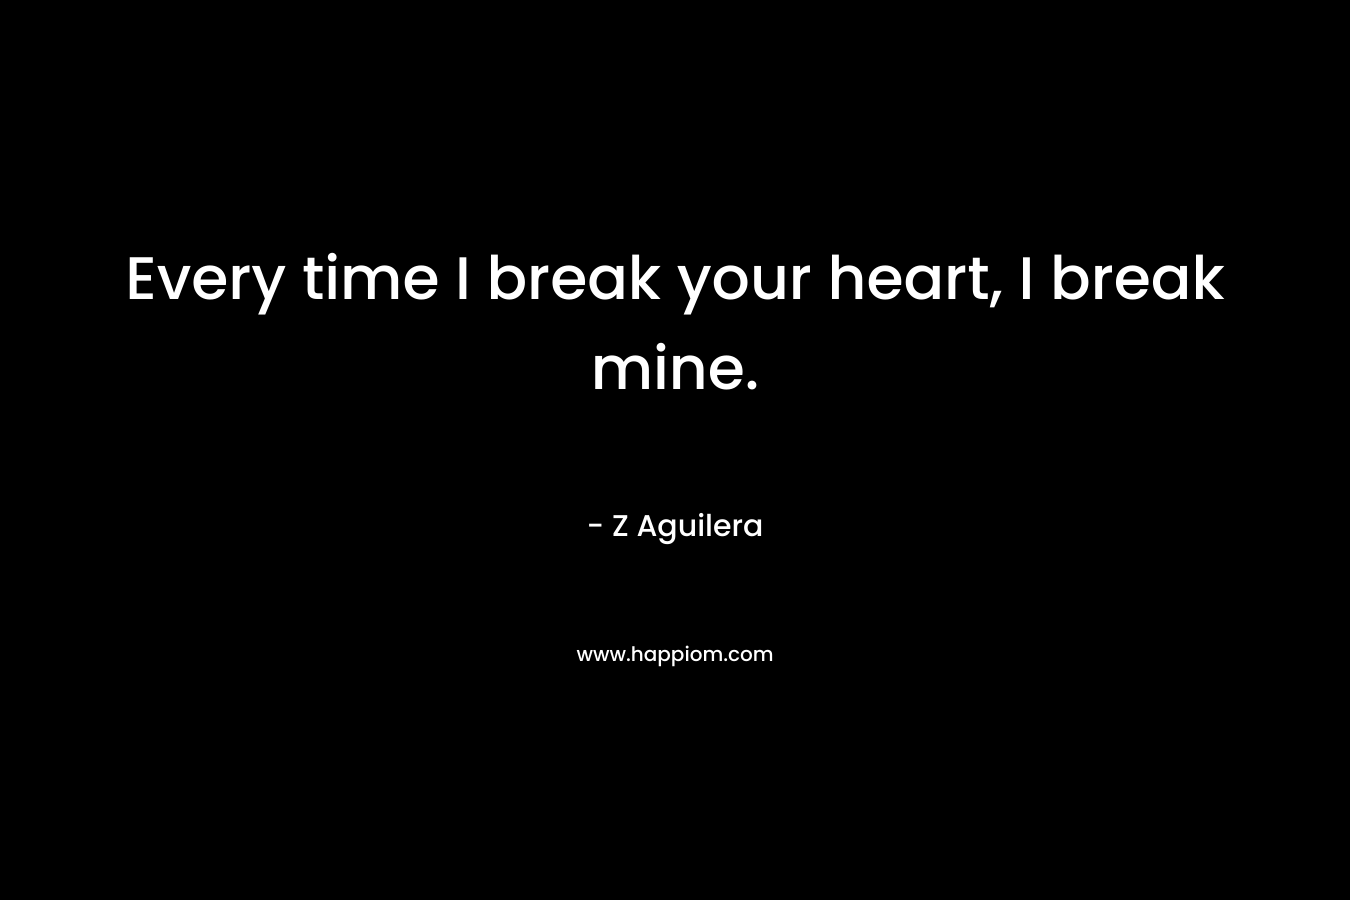 Every time I break your heart, I break mine.